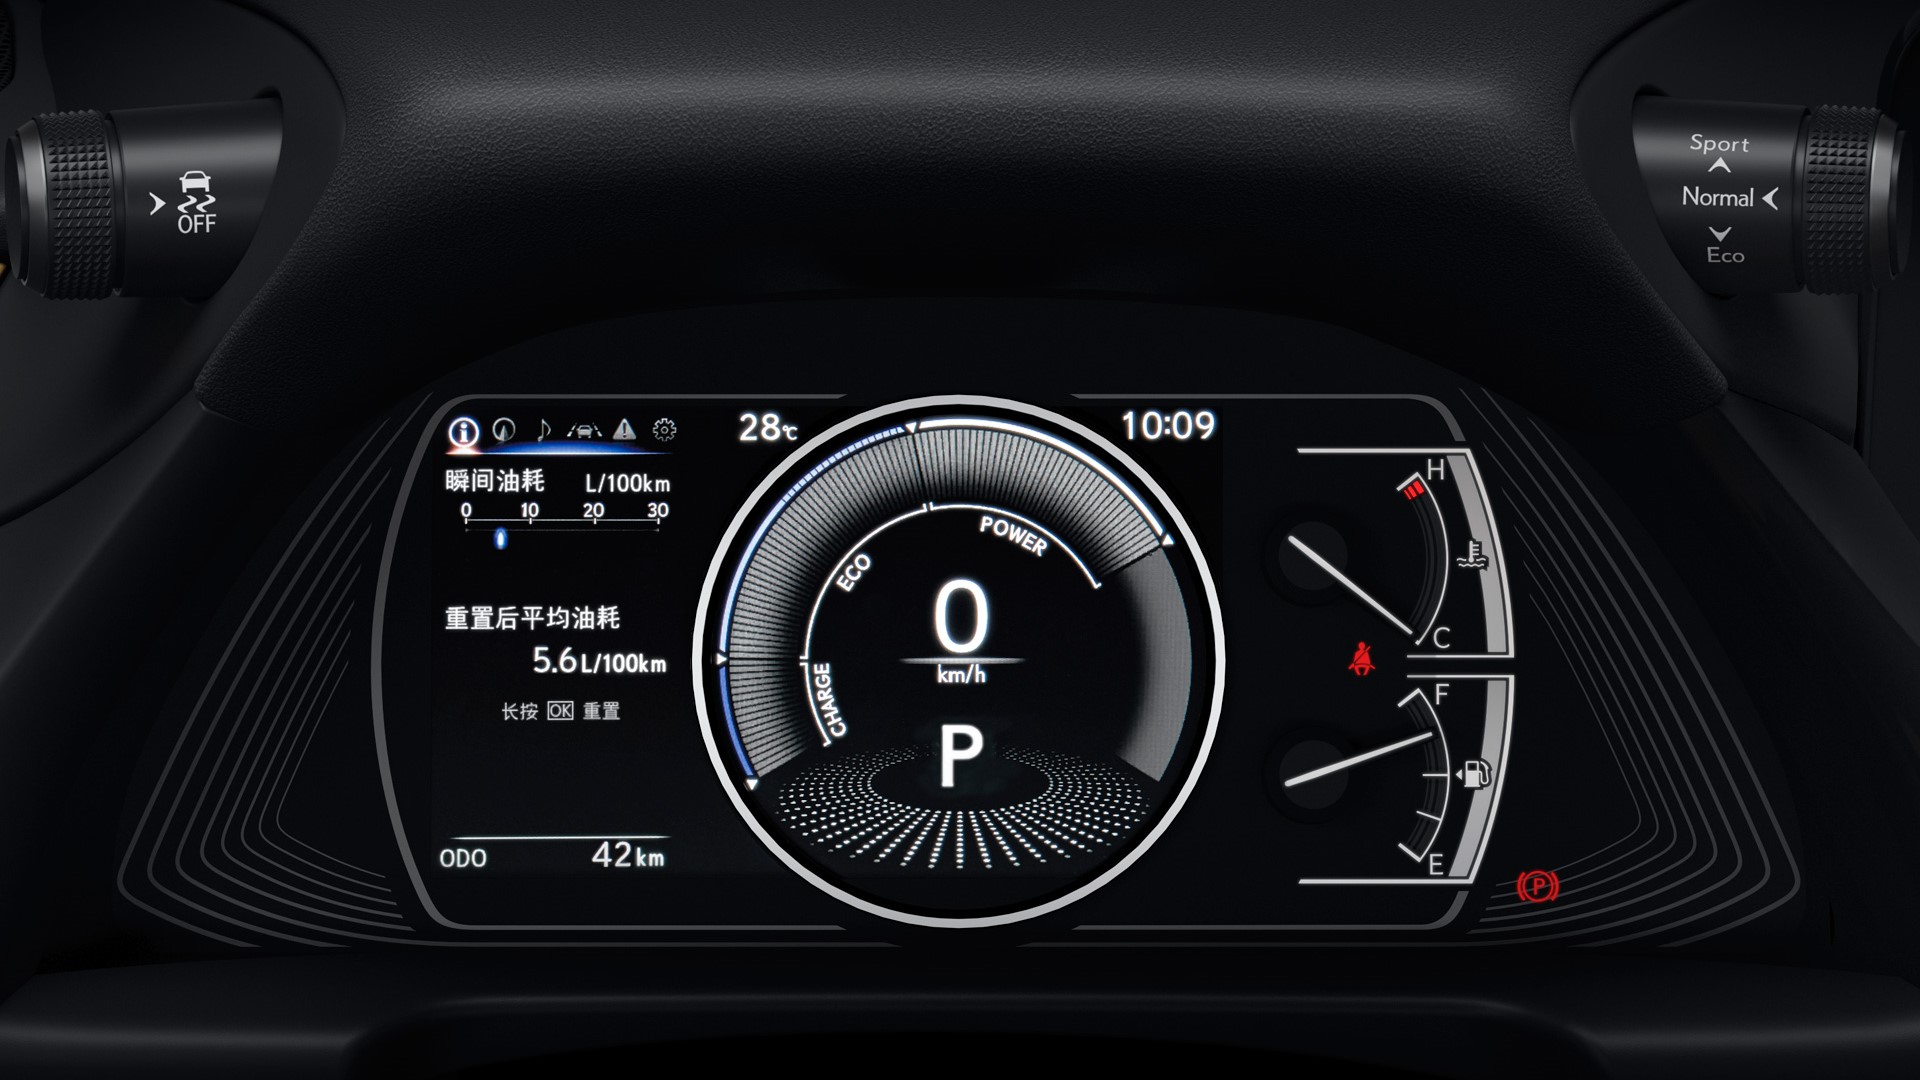 The Lexus ES Odometer